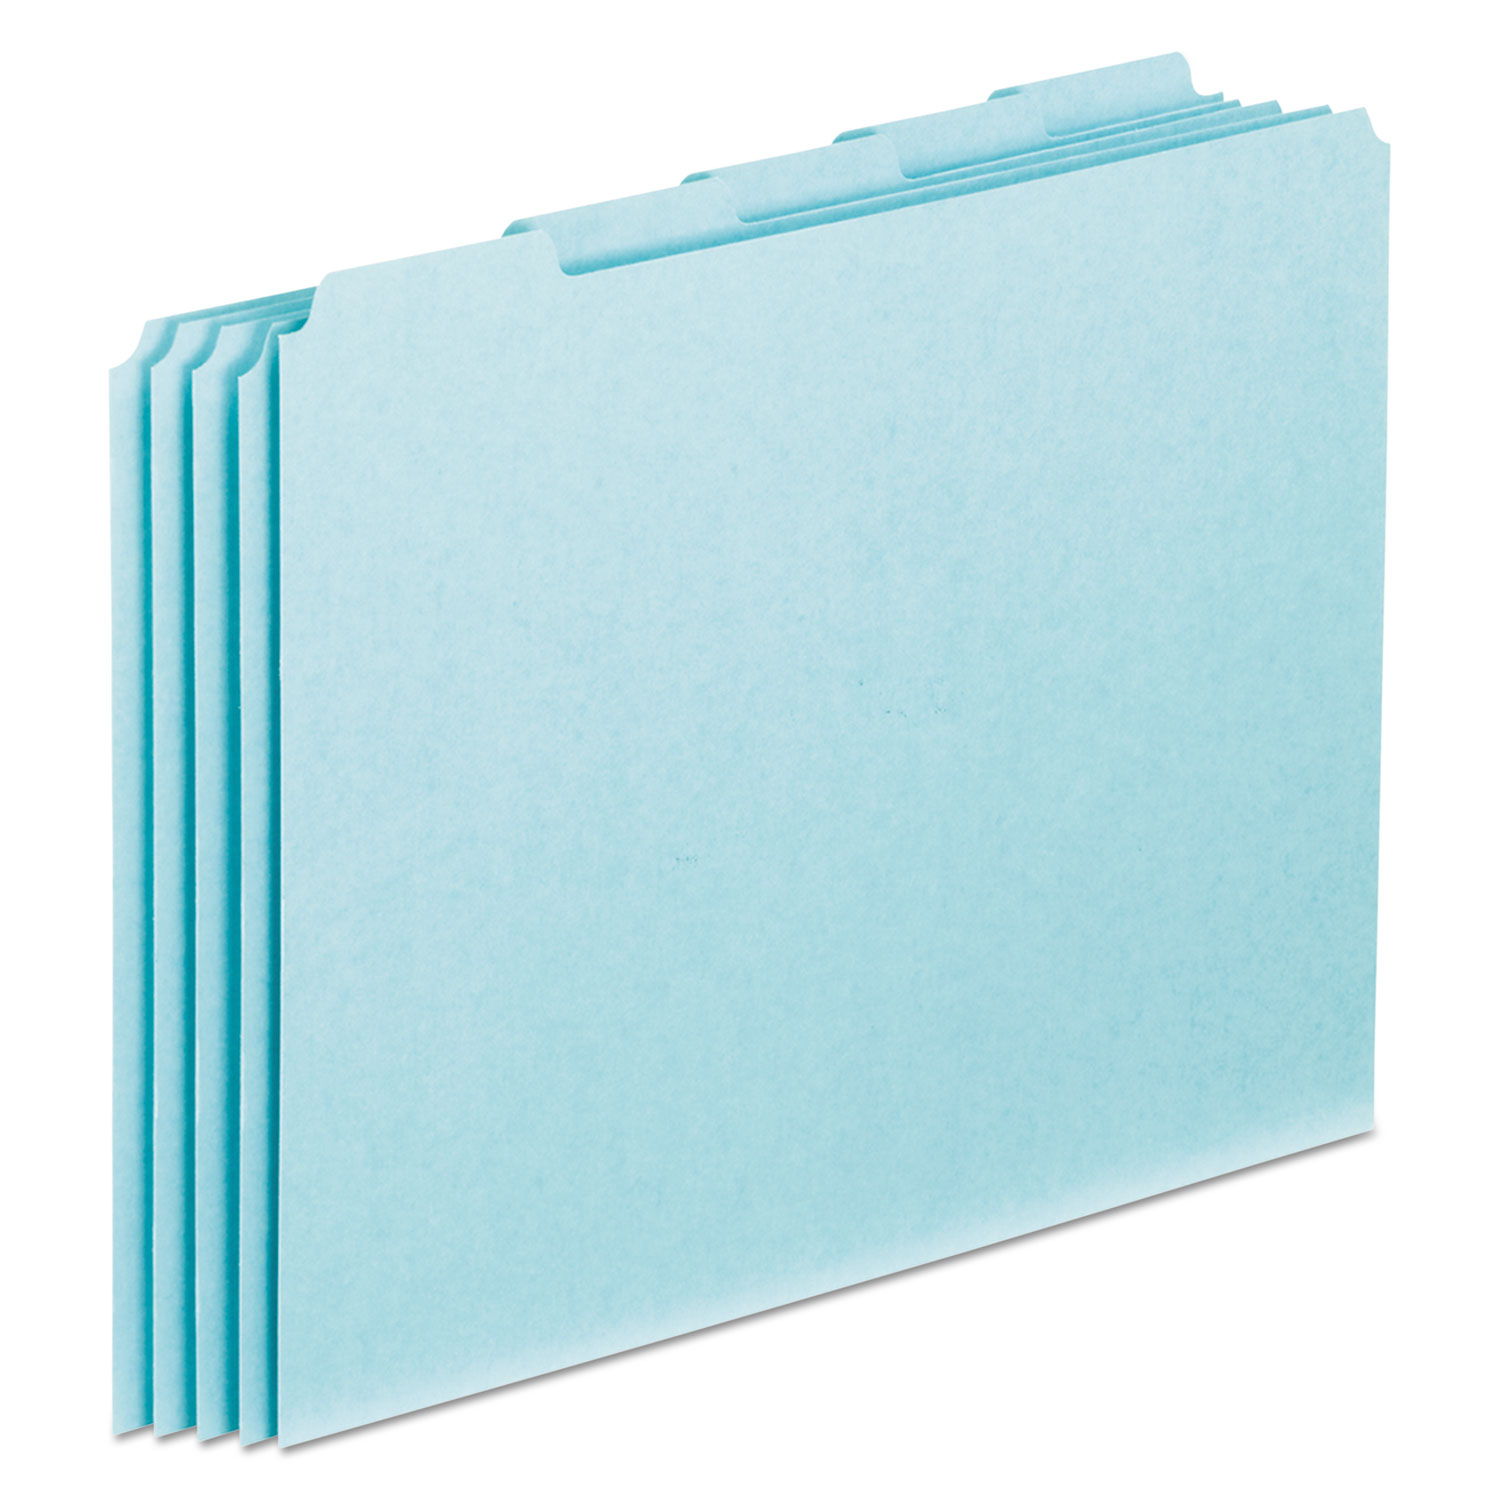  Pendaflex PN205 Blank Top Tab File Guides, 1/5-Cut Top Tab, Blank, 8.5 x 11, Blue, 100/Box (PFXPN205) 